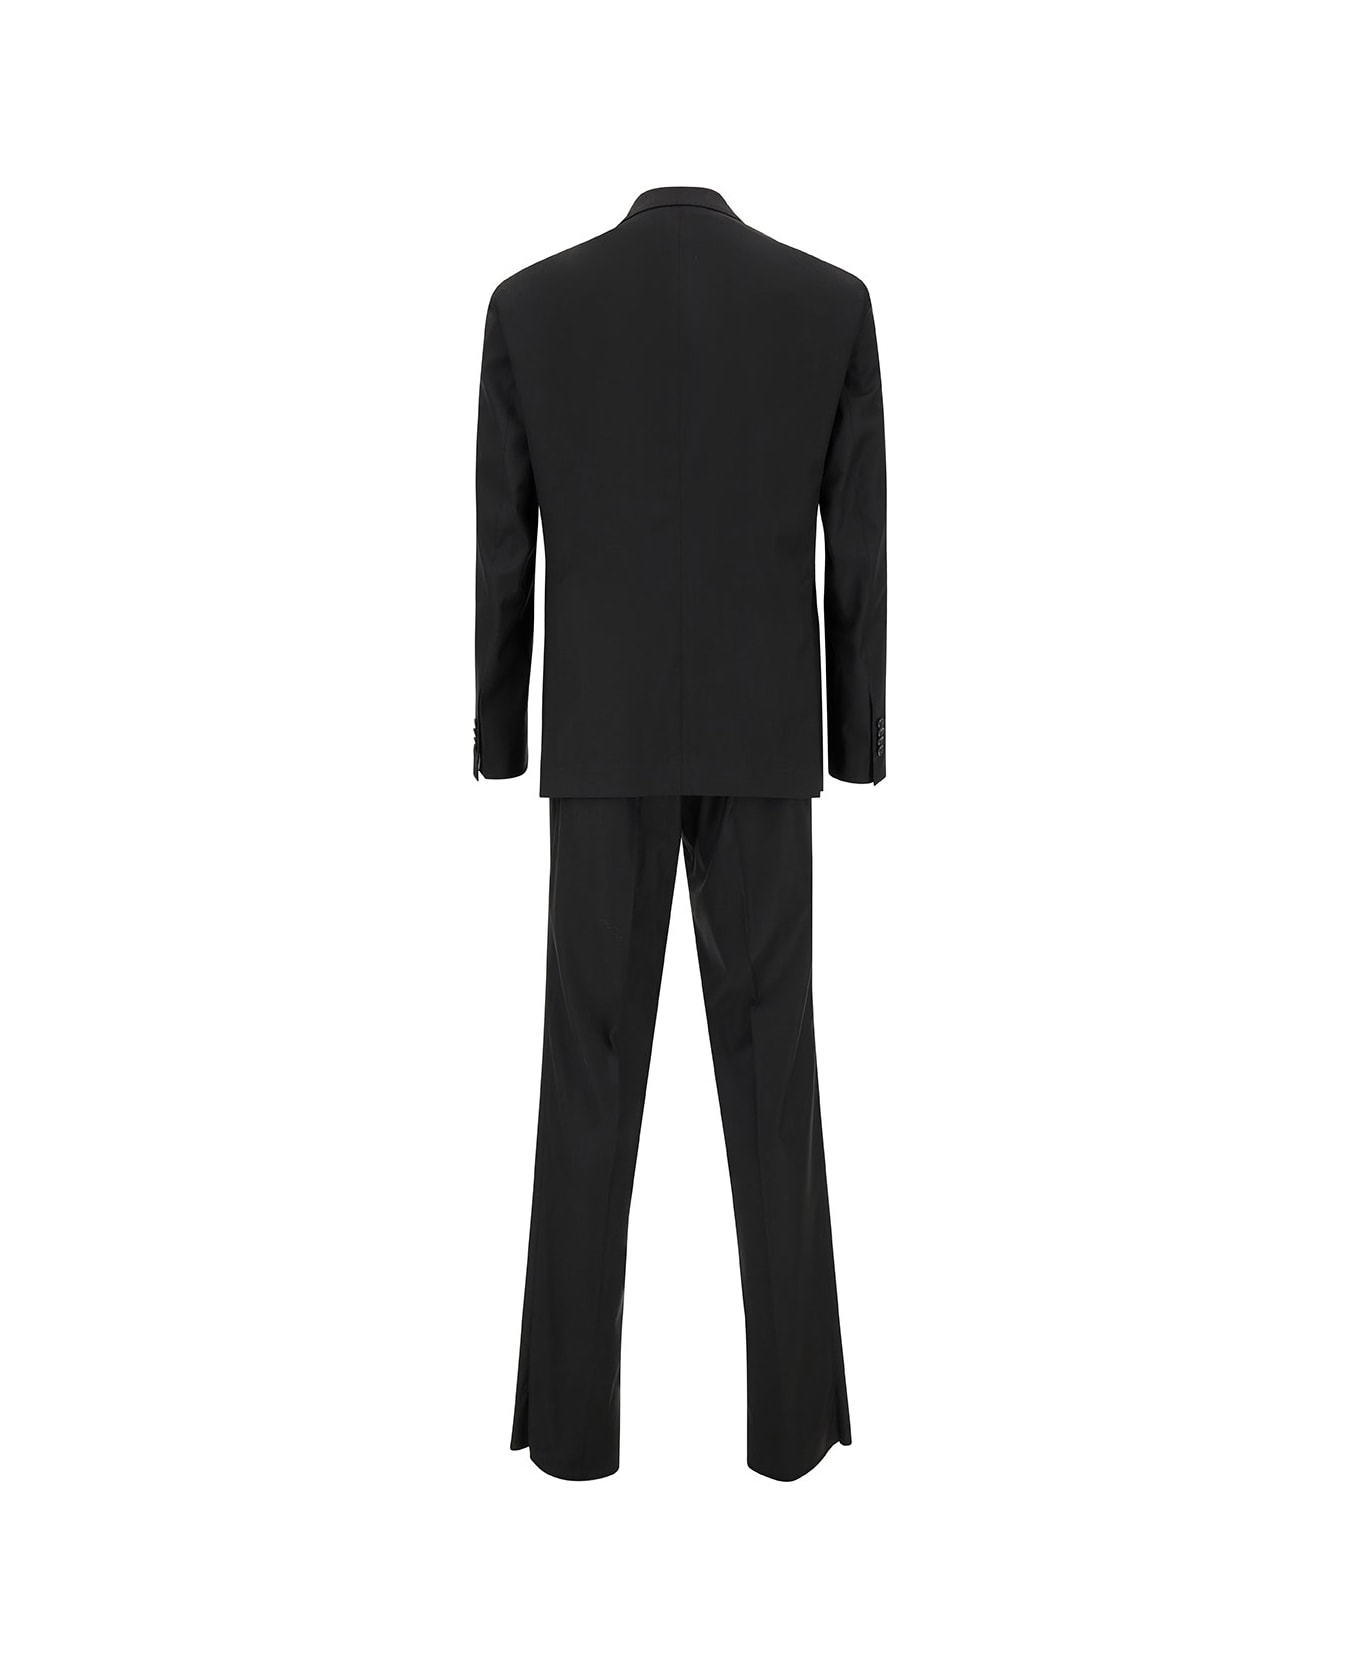 Tagliatore Black Double-breasted Jacket With Peak Revers In Wool Blend Man - Black